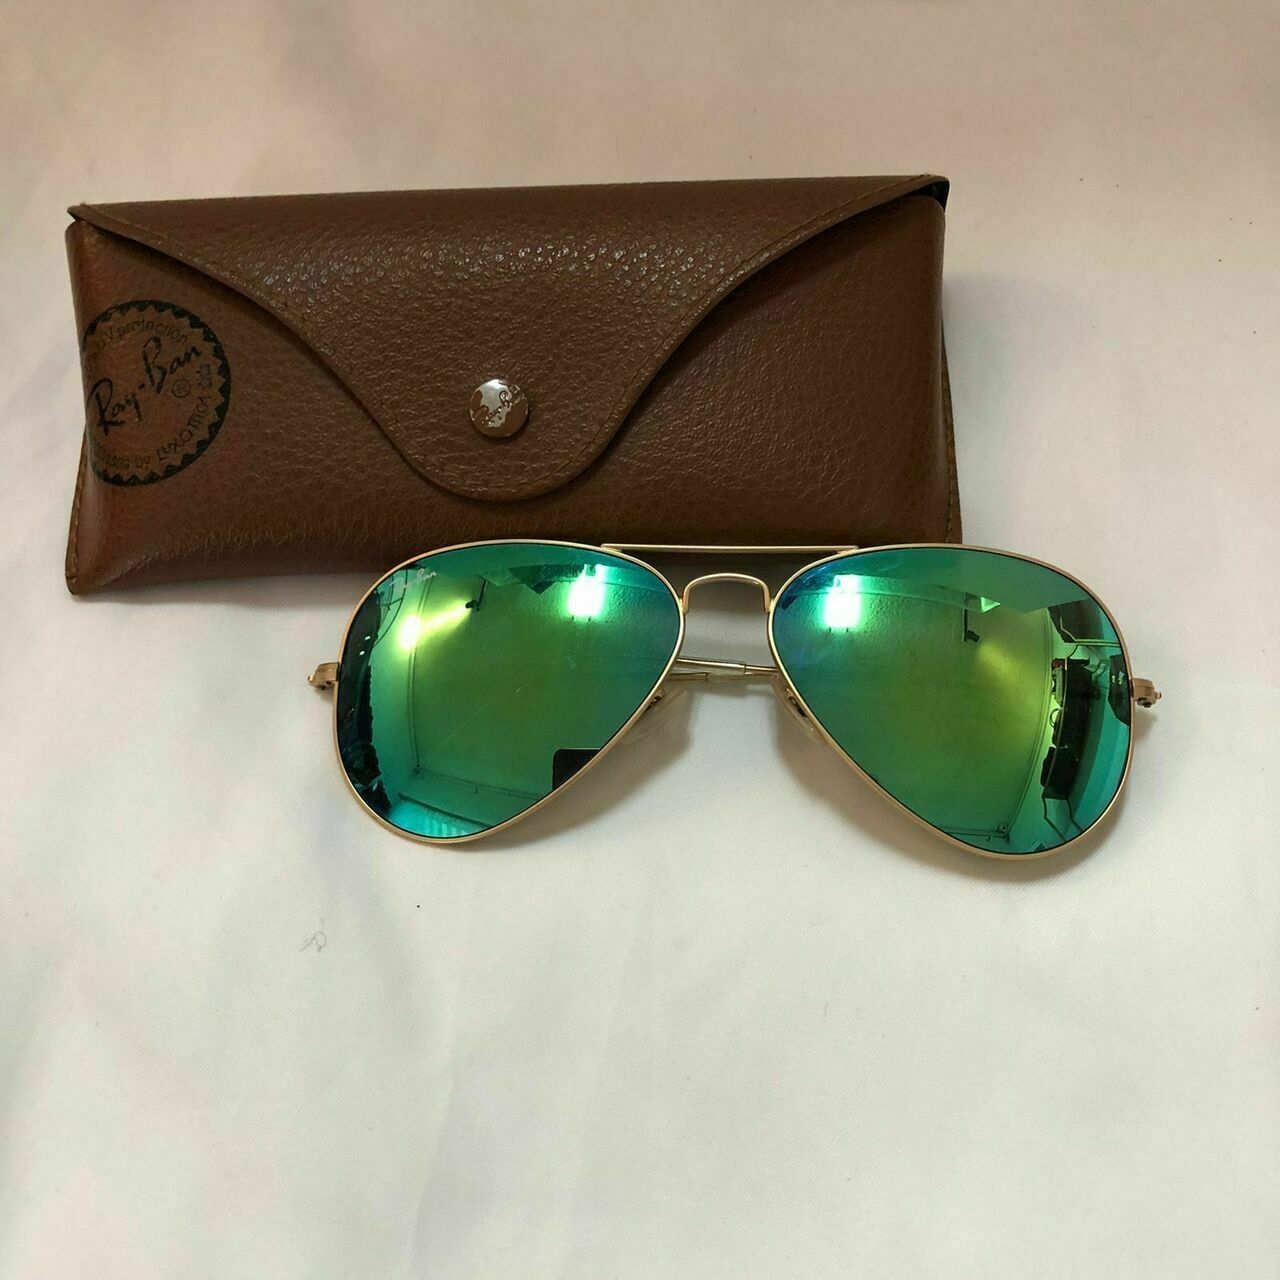 Ray Ban Green/Gold Aviator Sunglasses